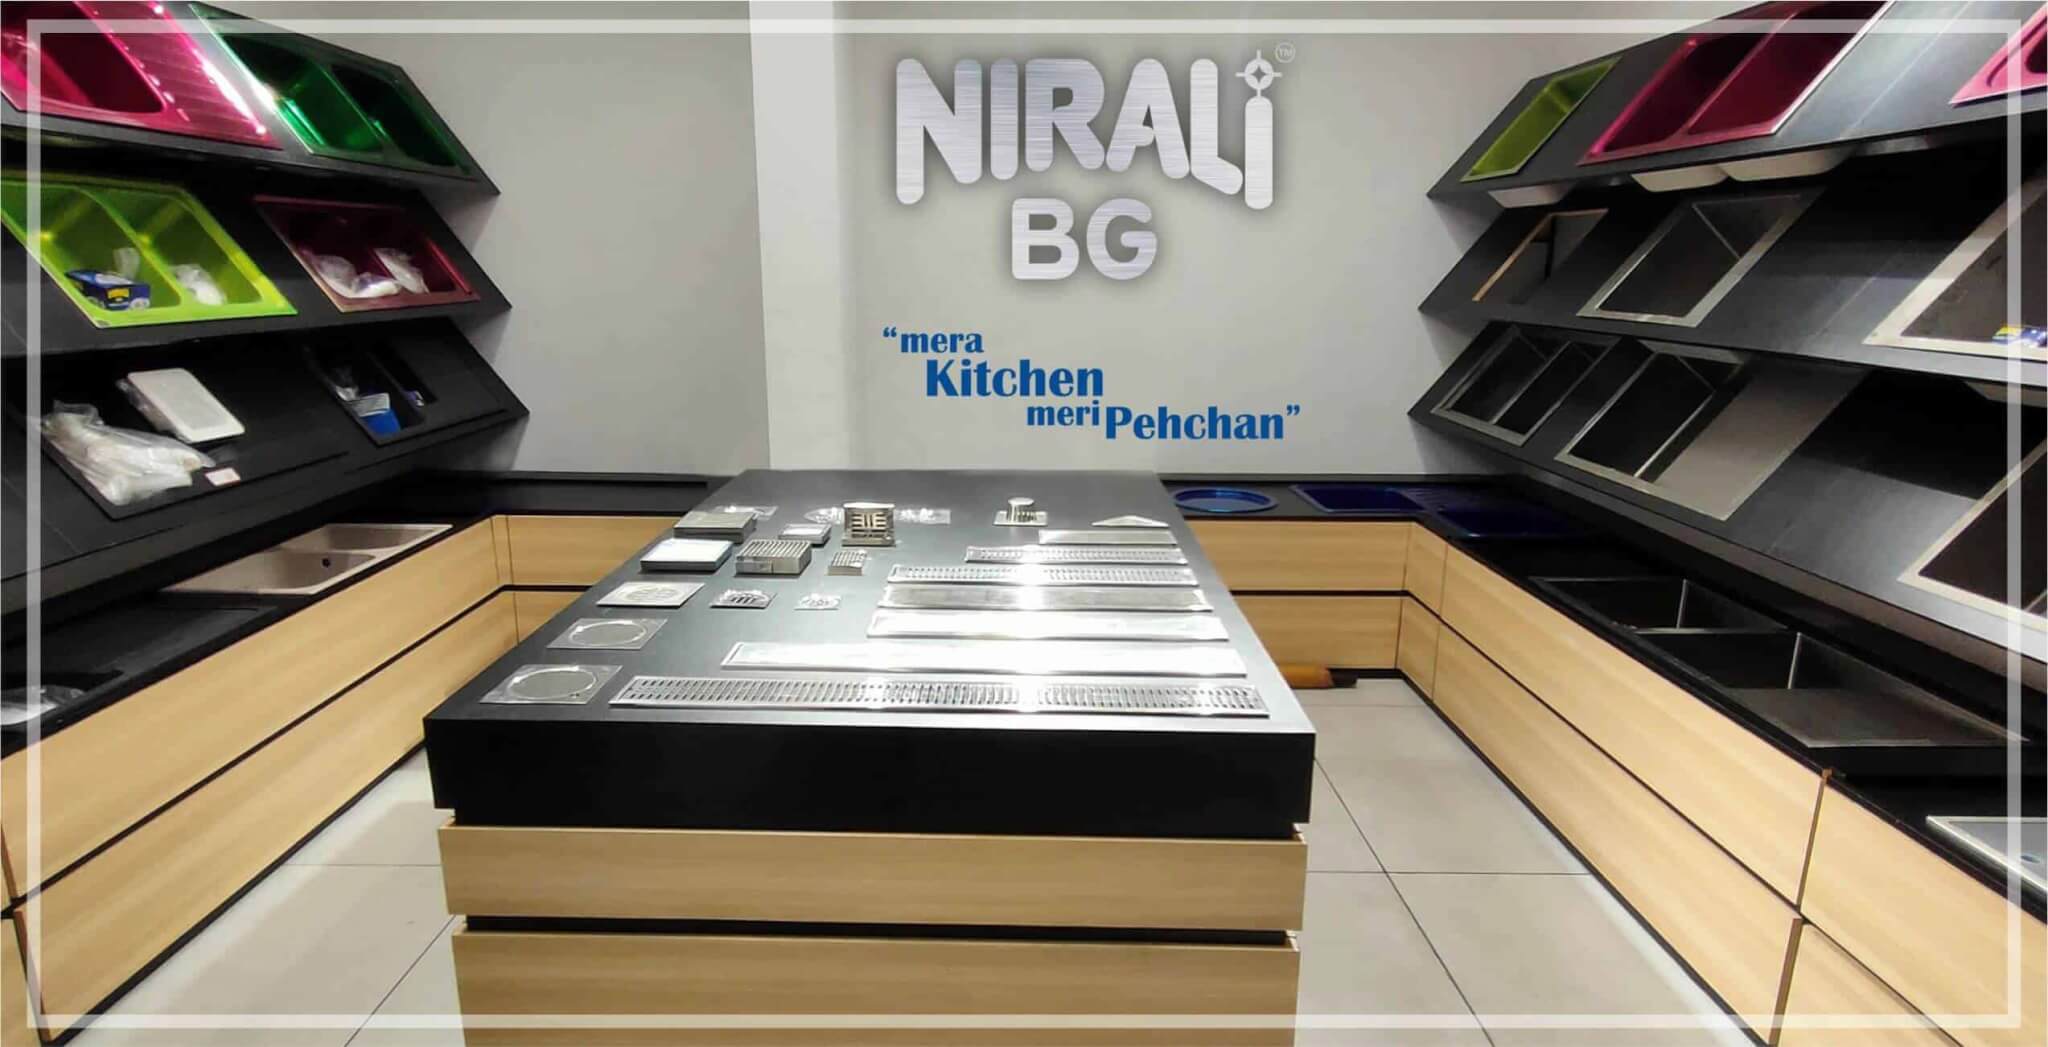 nirali kitchen sink models with price